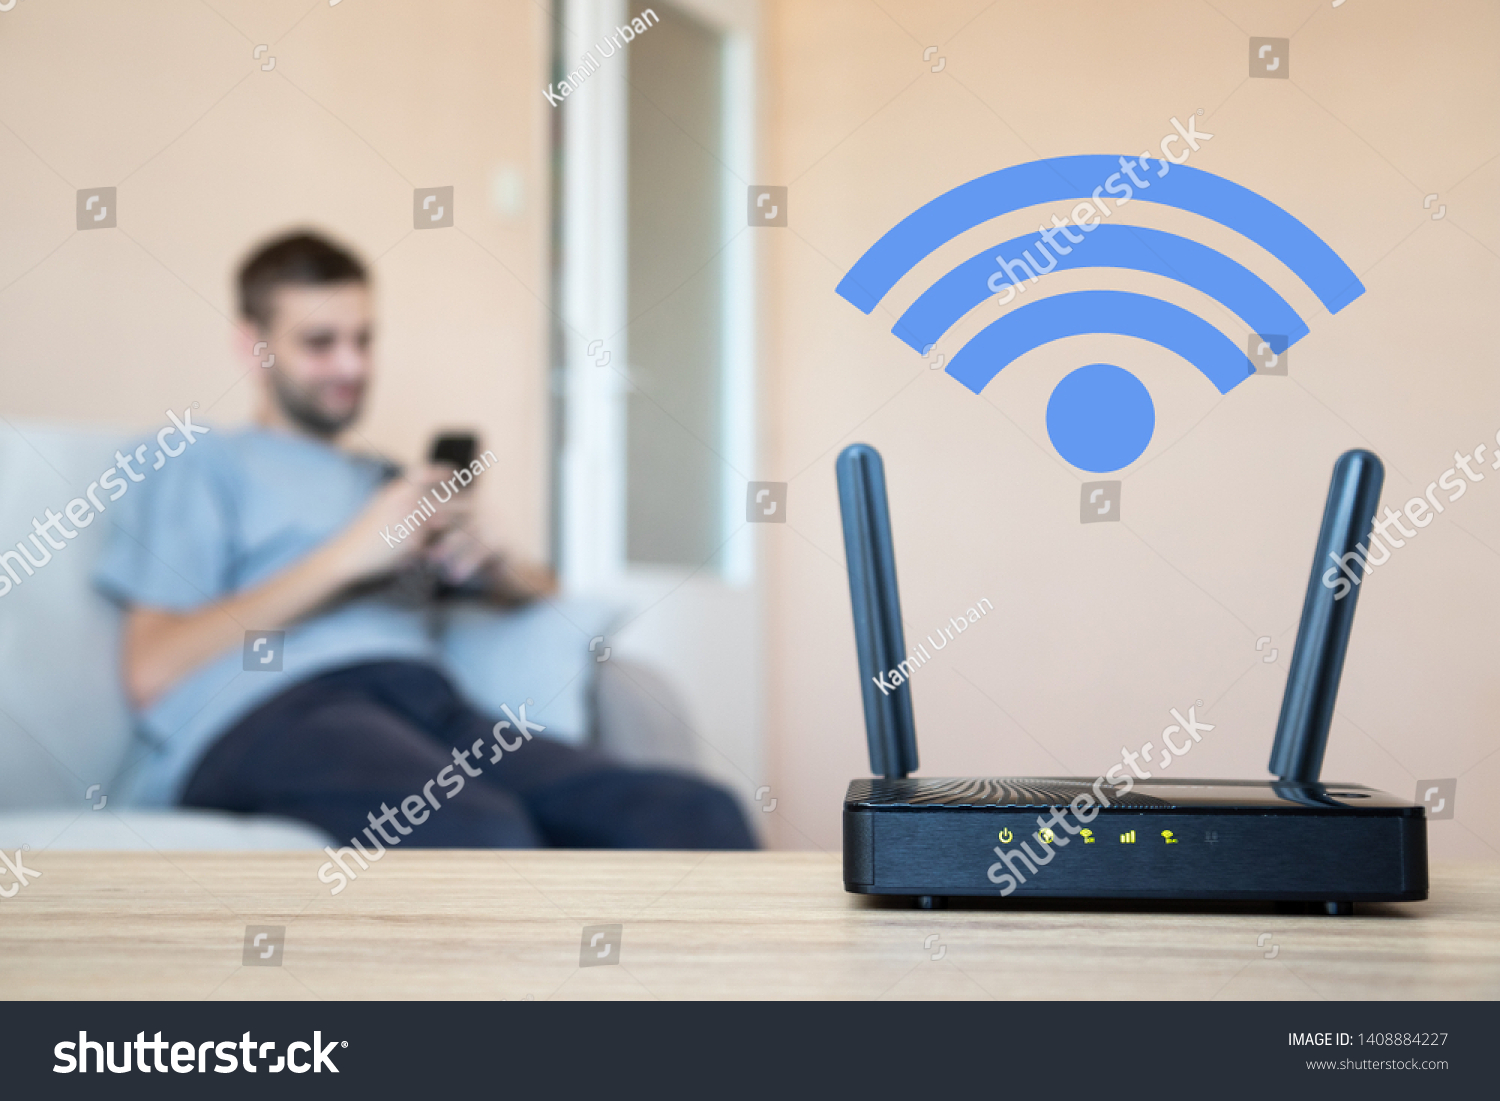 Wifi modem. Young man surfs the internet. Version 2 - wifi symbol. #1408884227